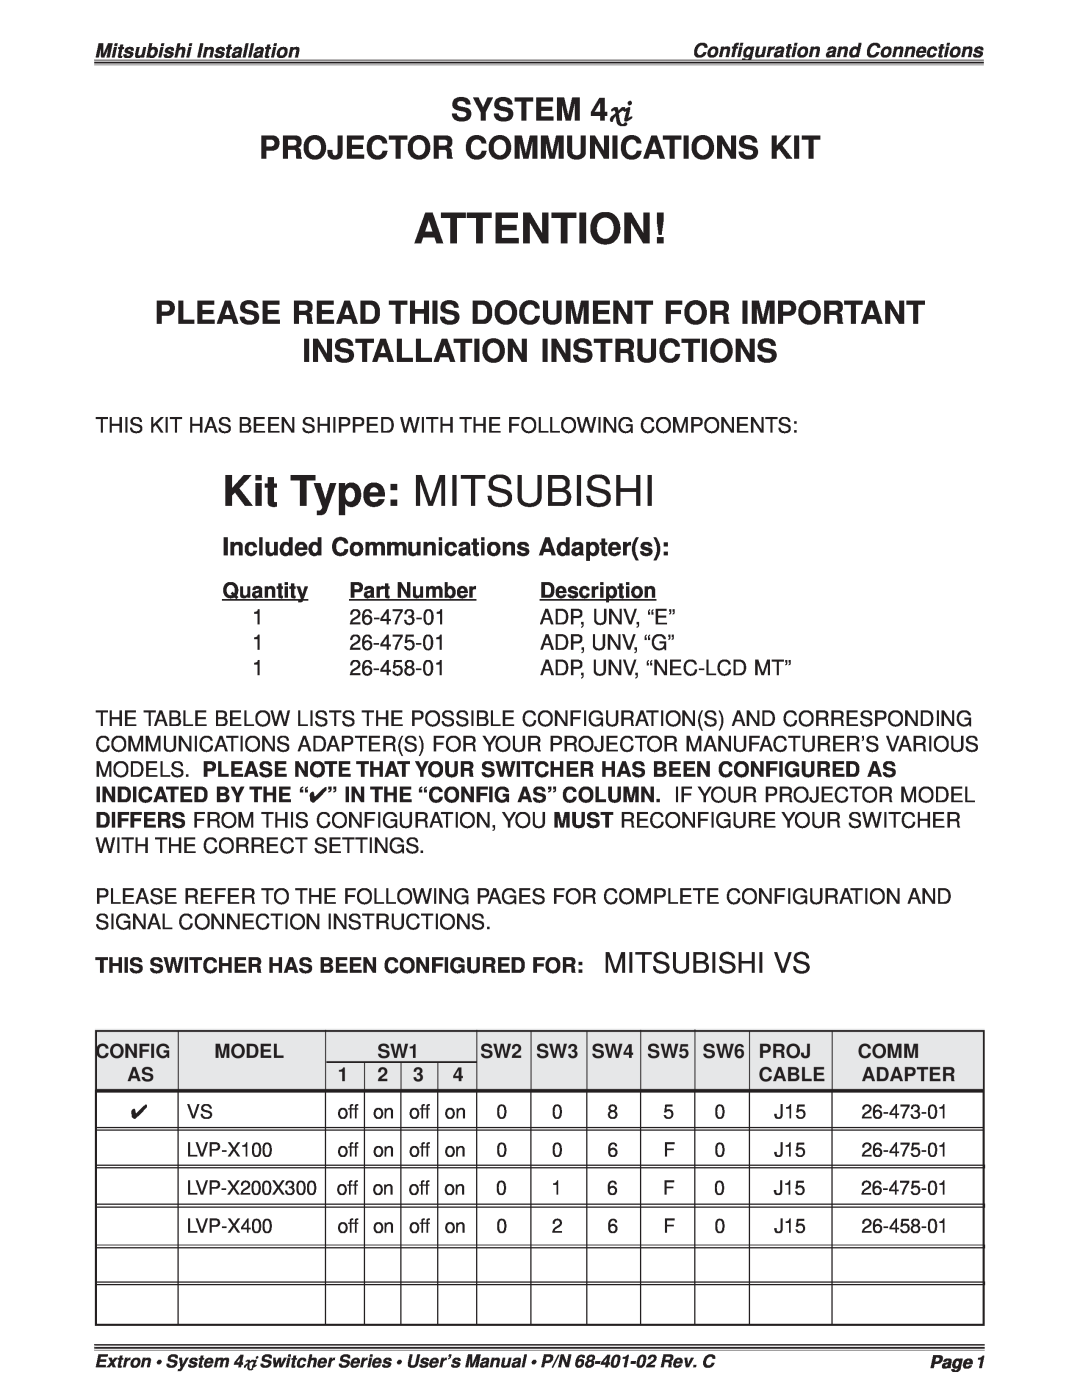 Mitsubishi Electronics 4XIXIXIXIXI user manual Kit Type MITSUBISHI, System Projector Communications Kit, Quantity 